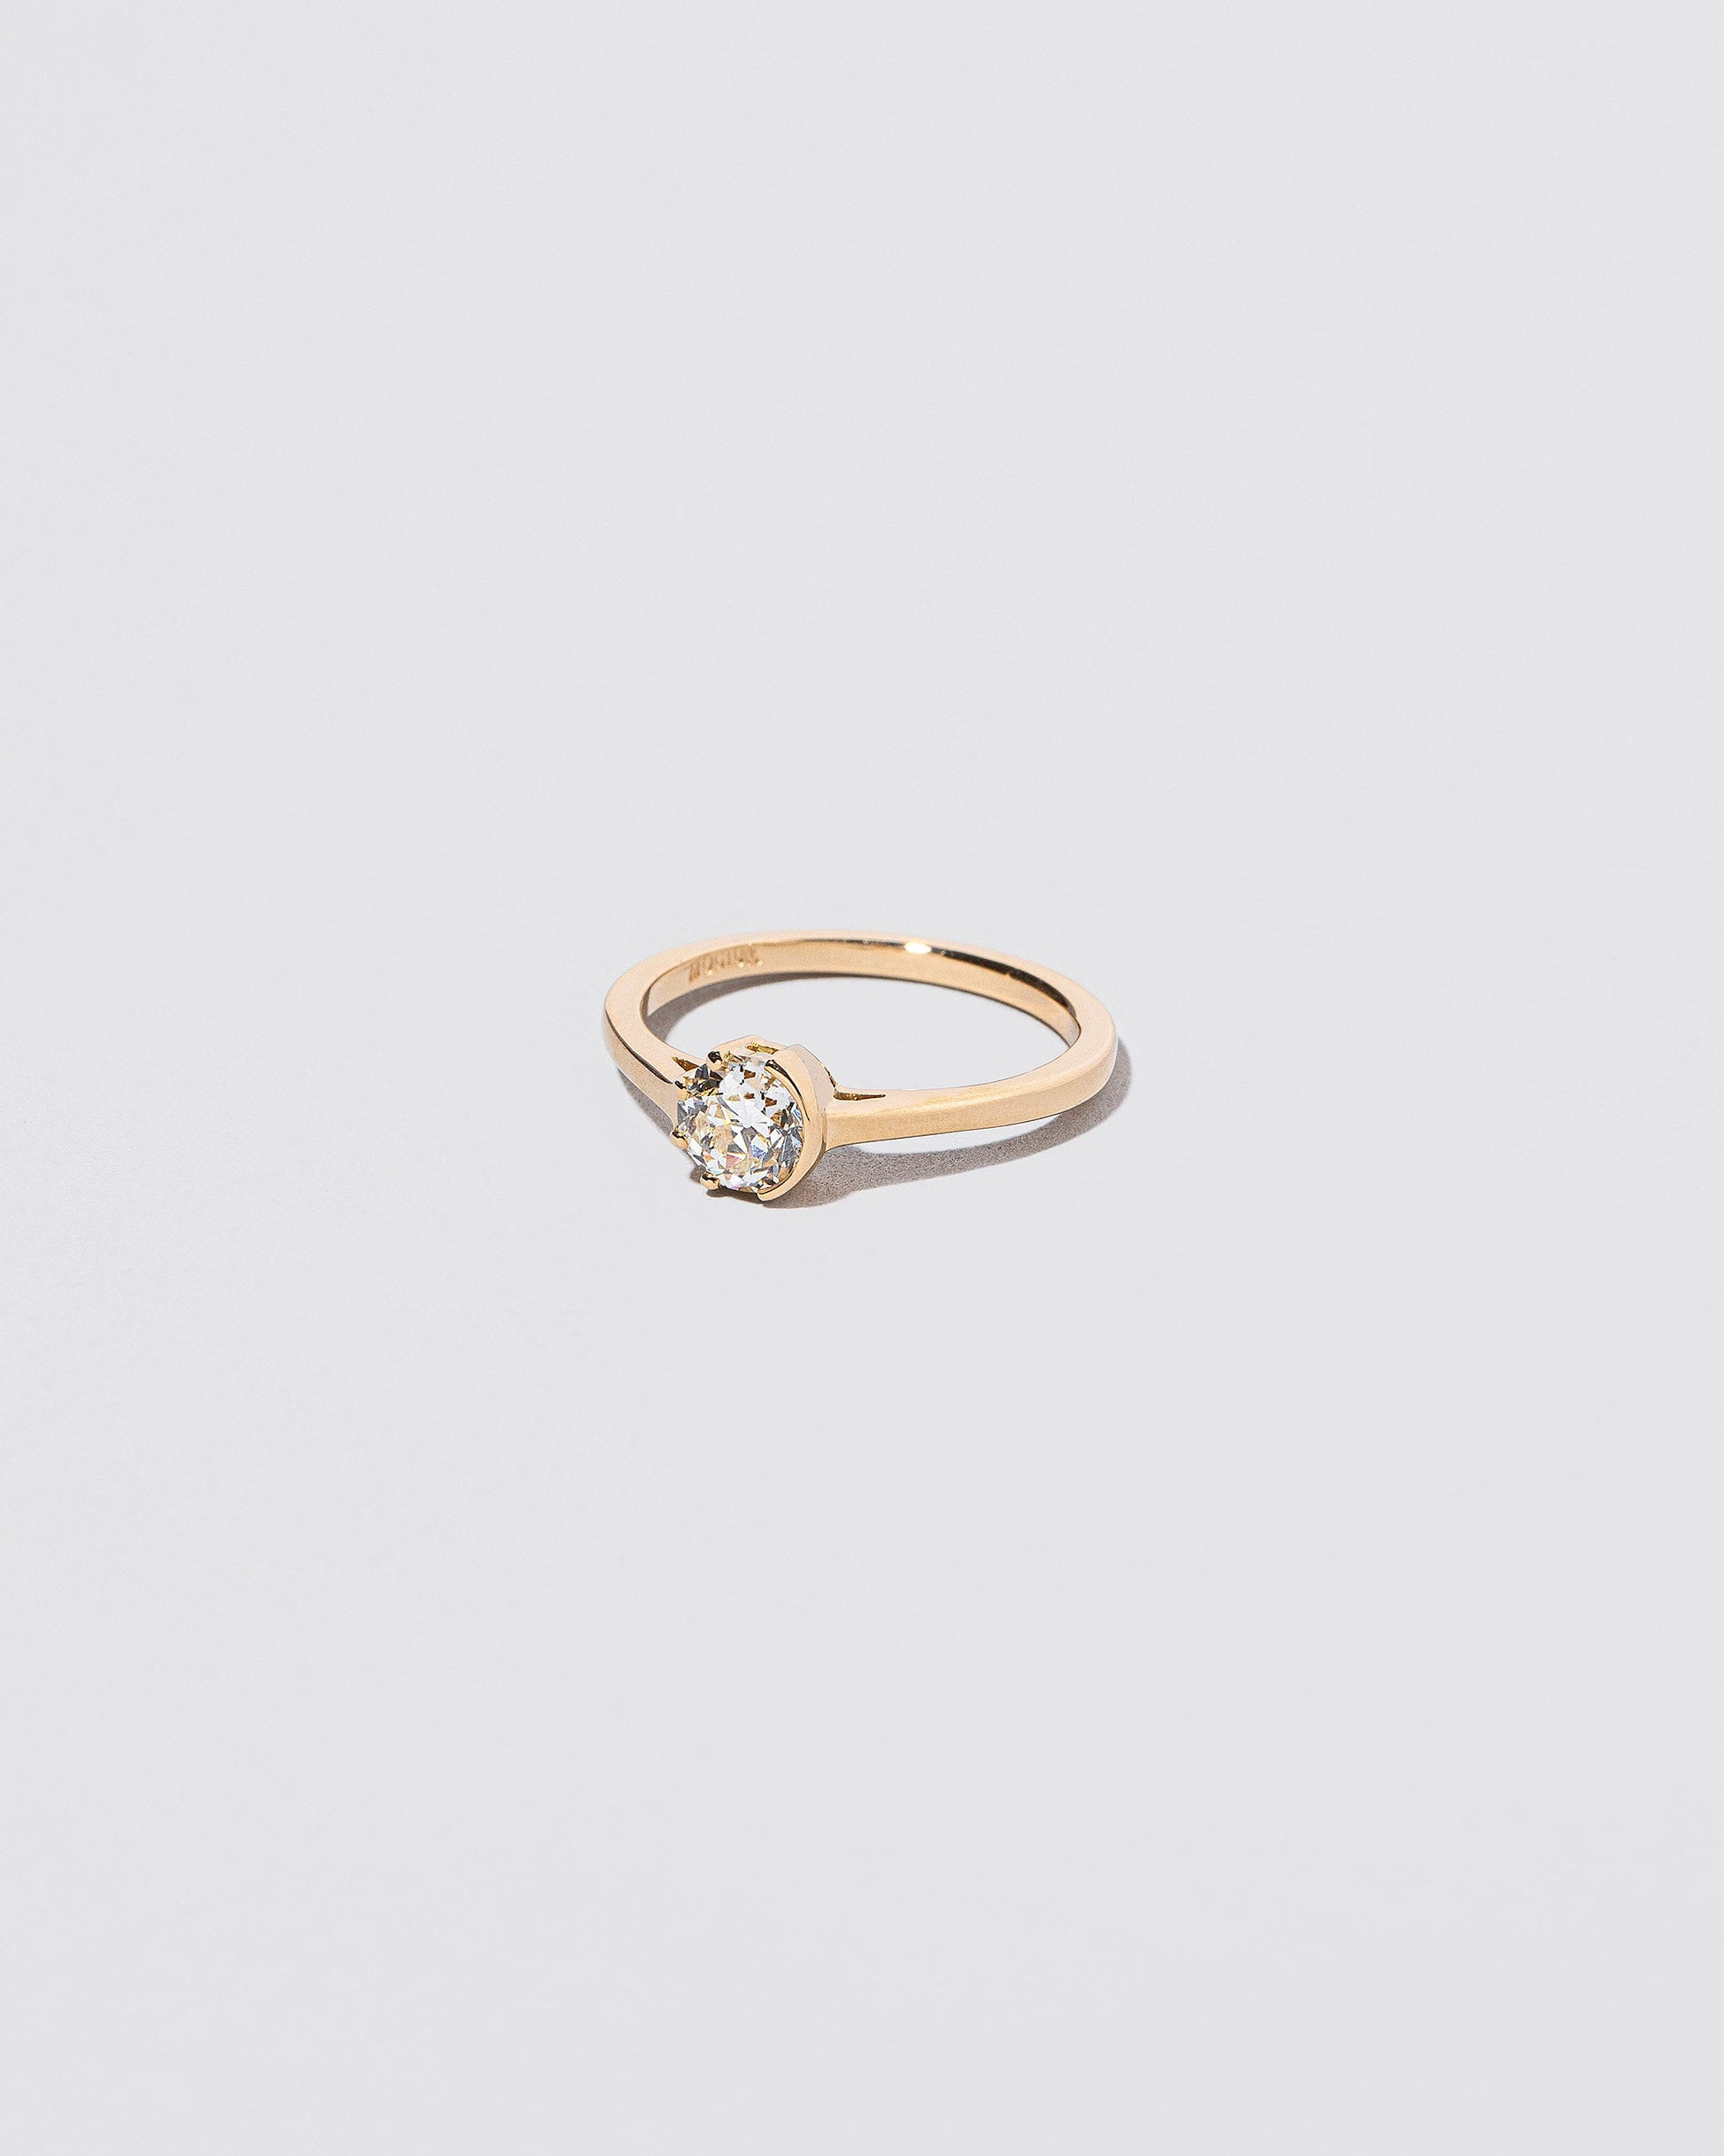 Sun & Moon Ring - White Diamond on light color background.